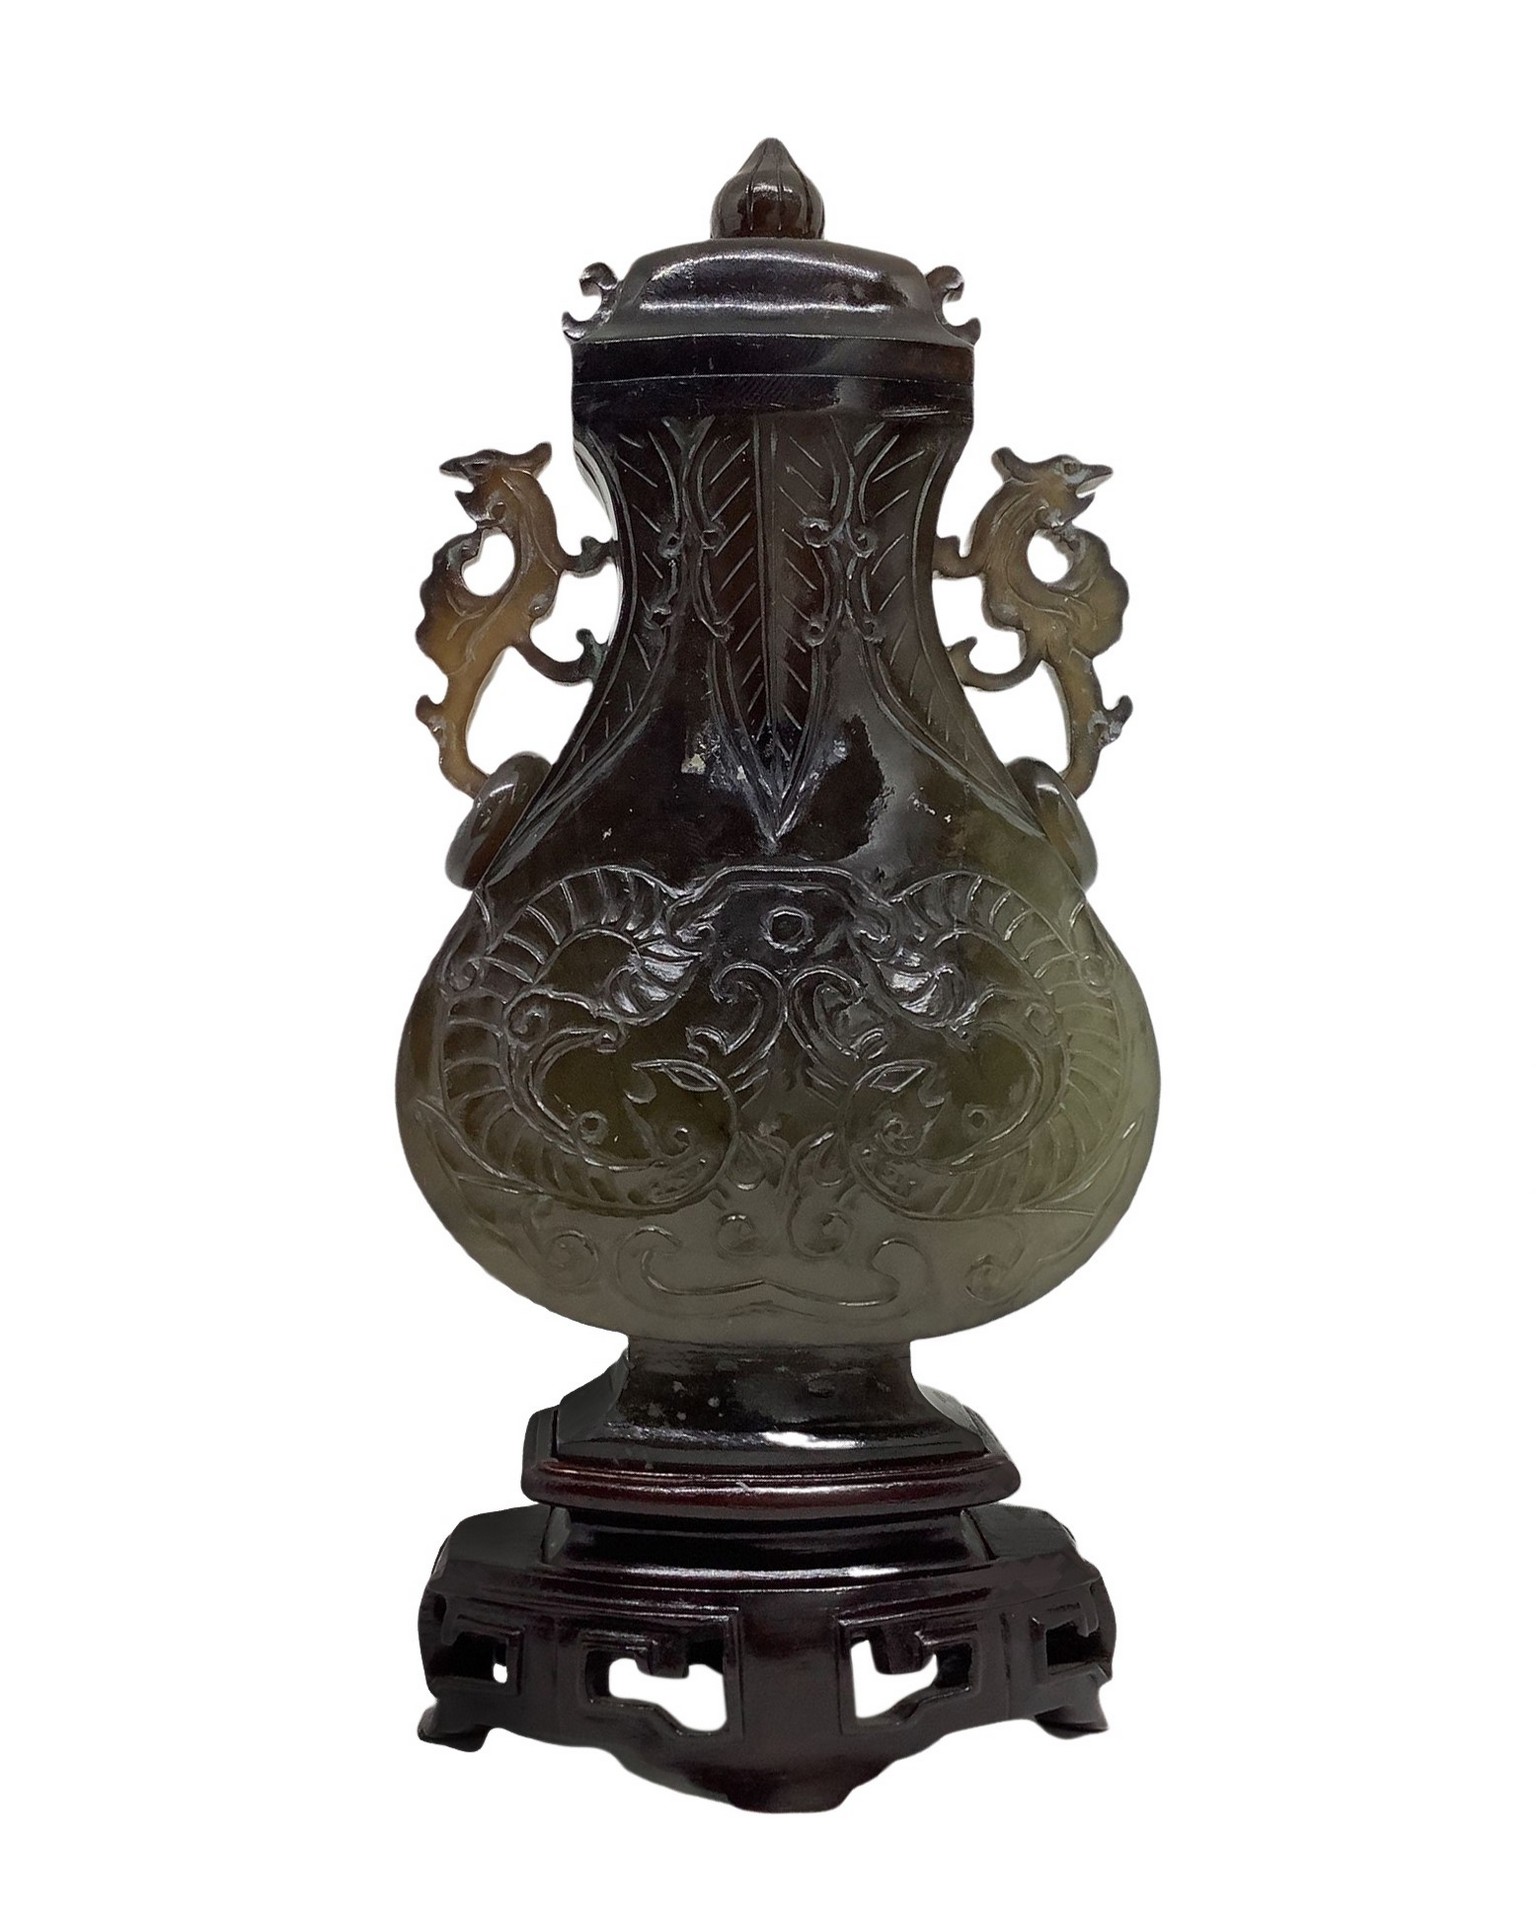 Dark green jade perfume burner with wooden base